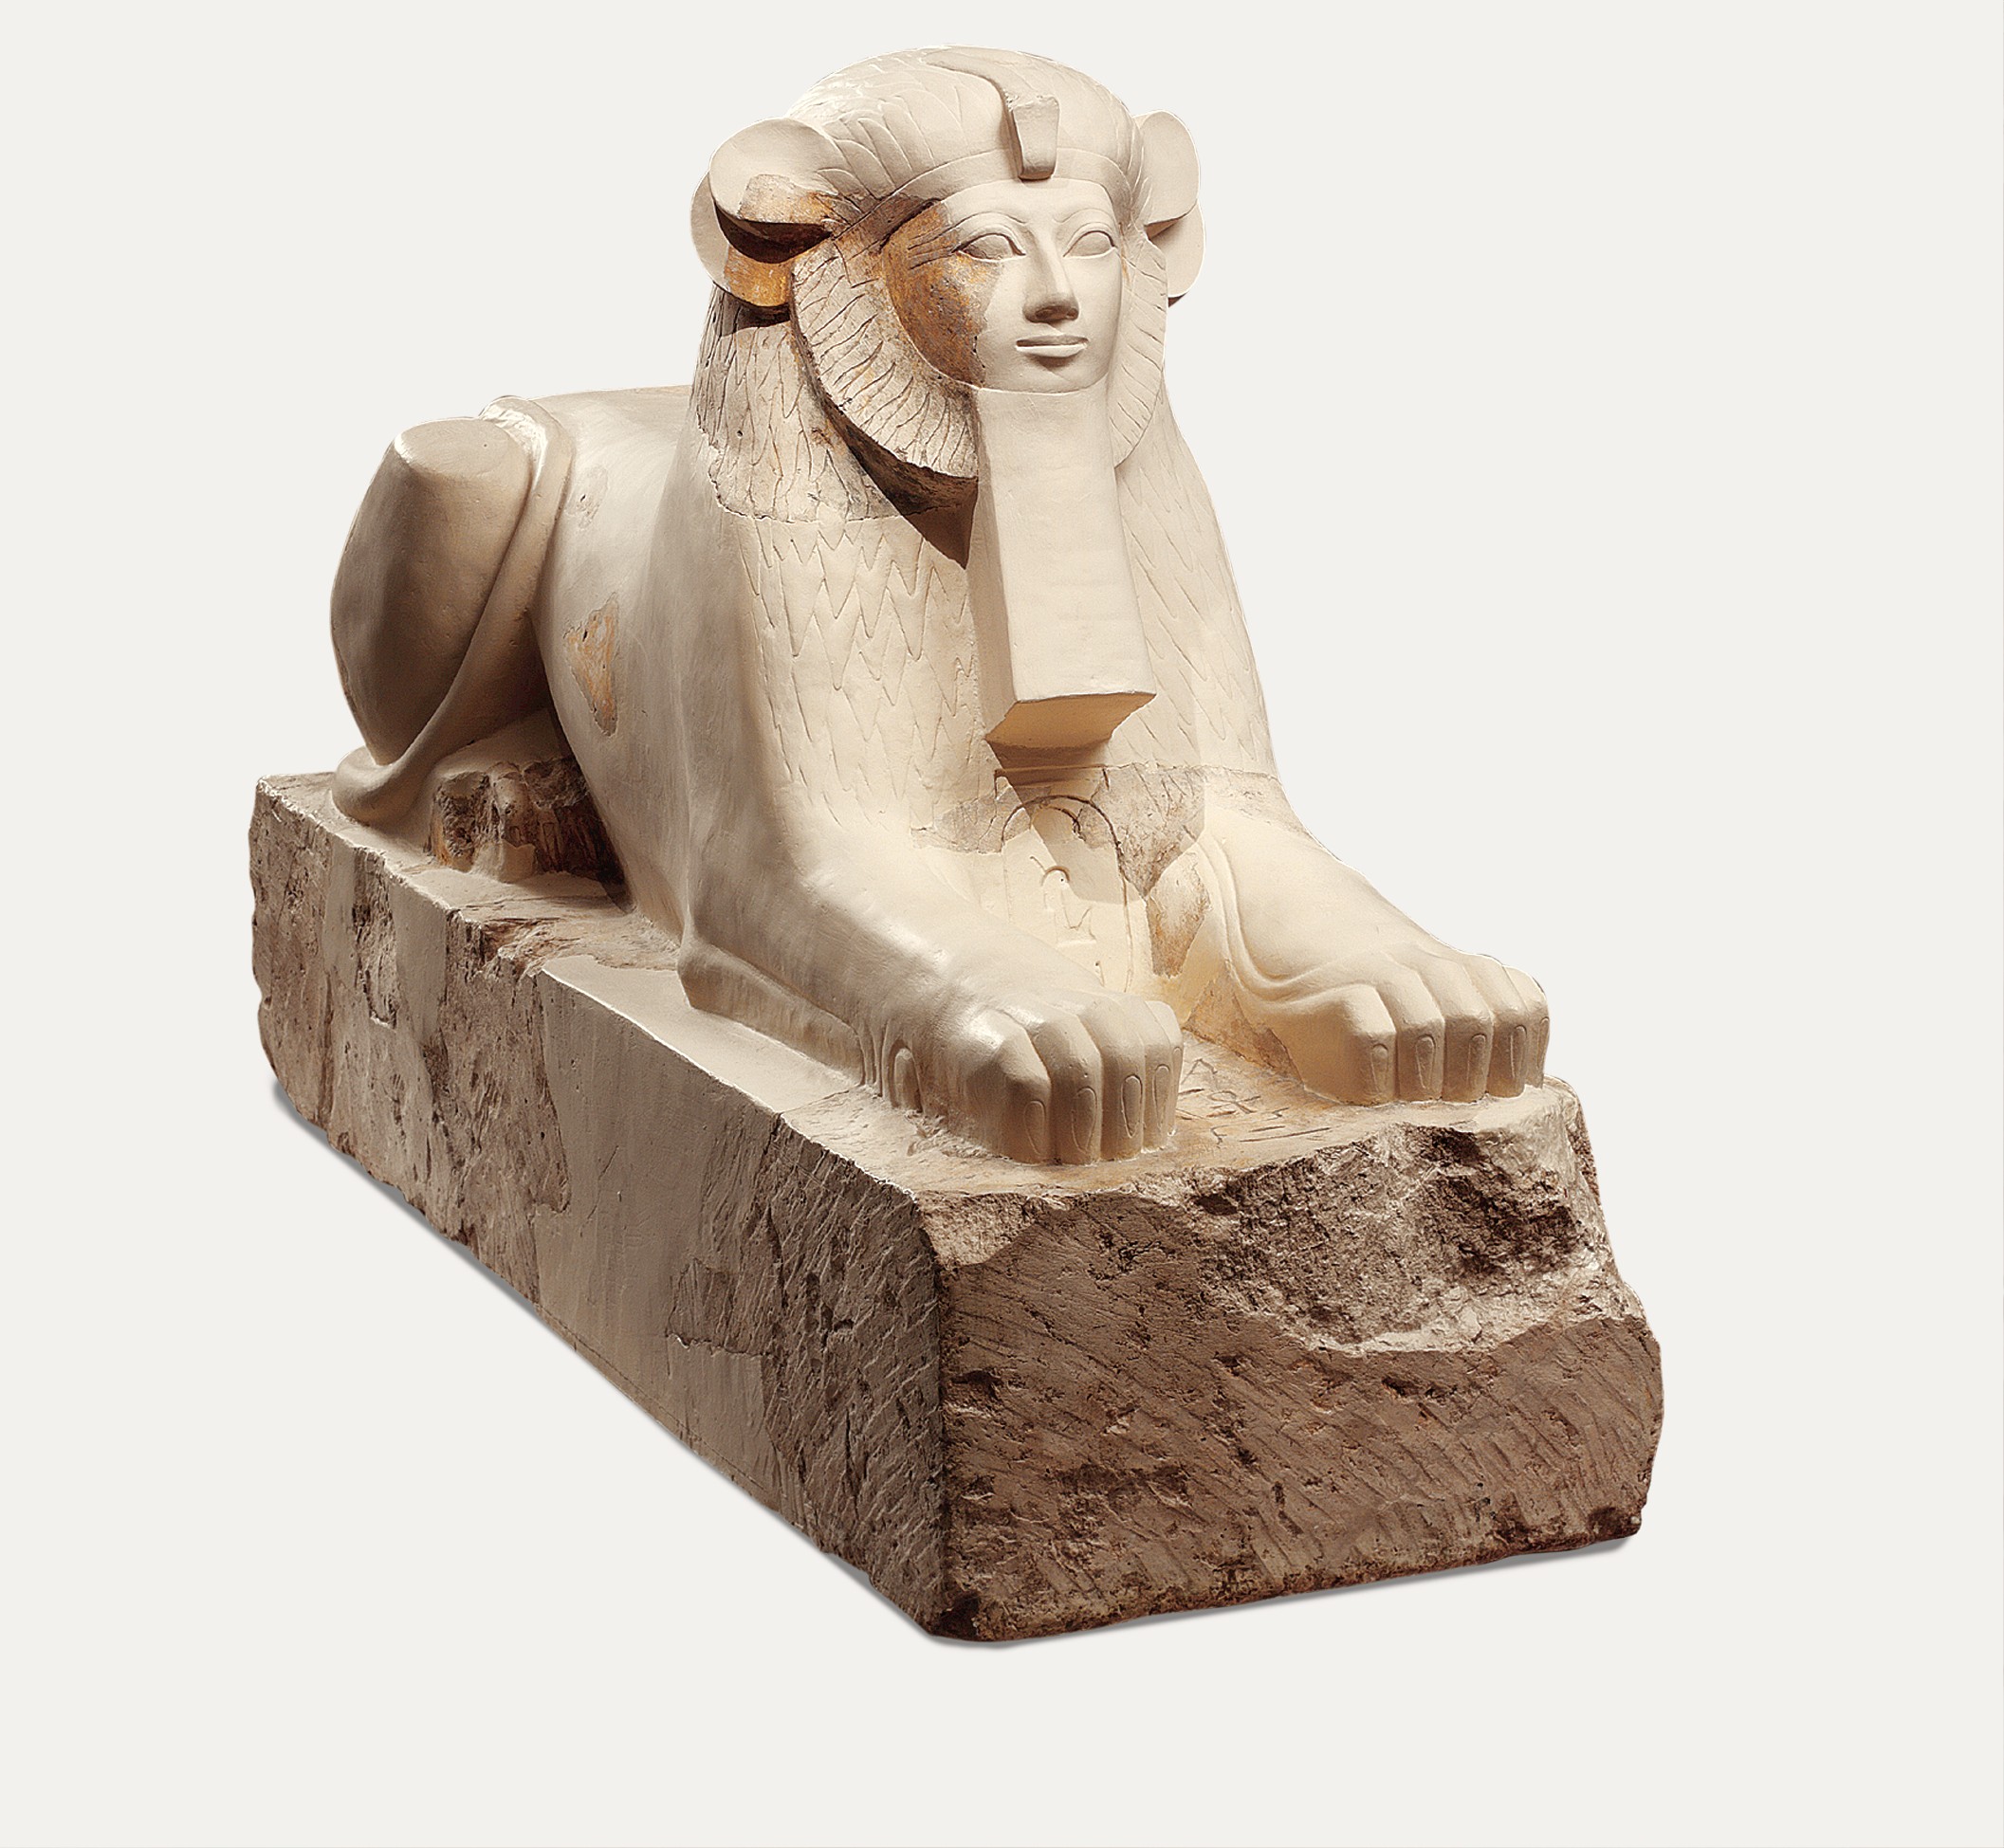 temple of hatshepsut, Sphinx of Hatshepsut, ca. 1479–1458 BCE, The Metropolitan Museum of Art, New York, NY, USA.